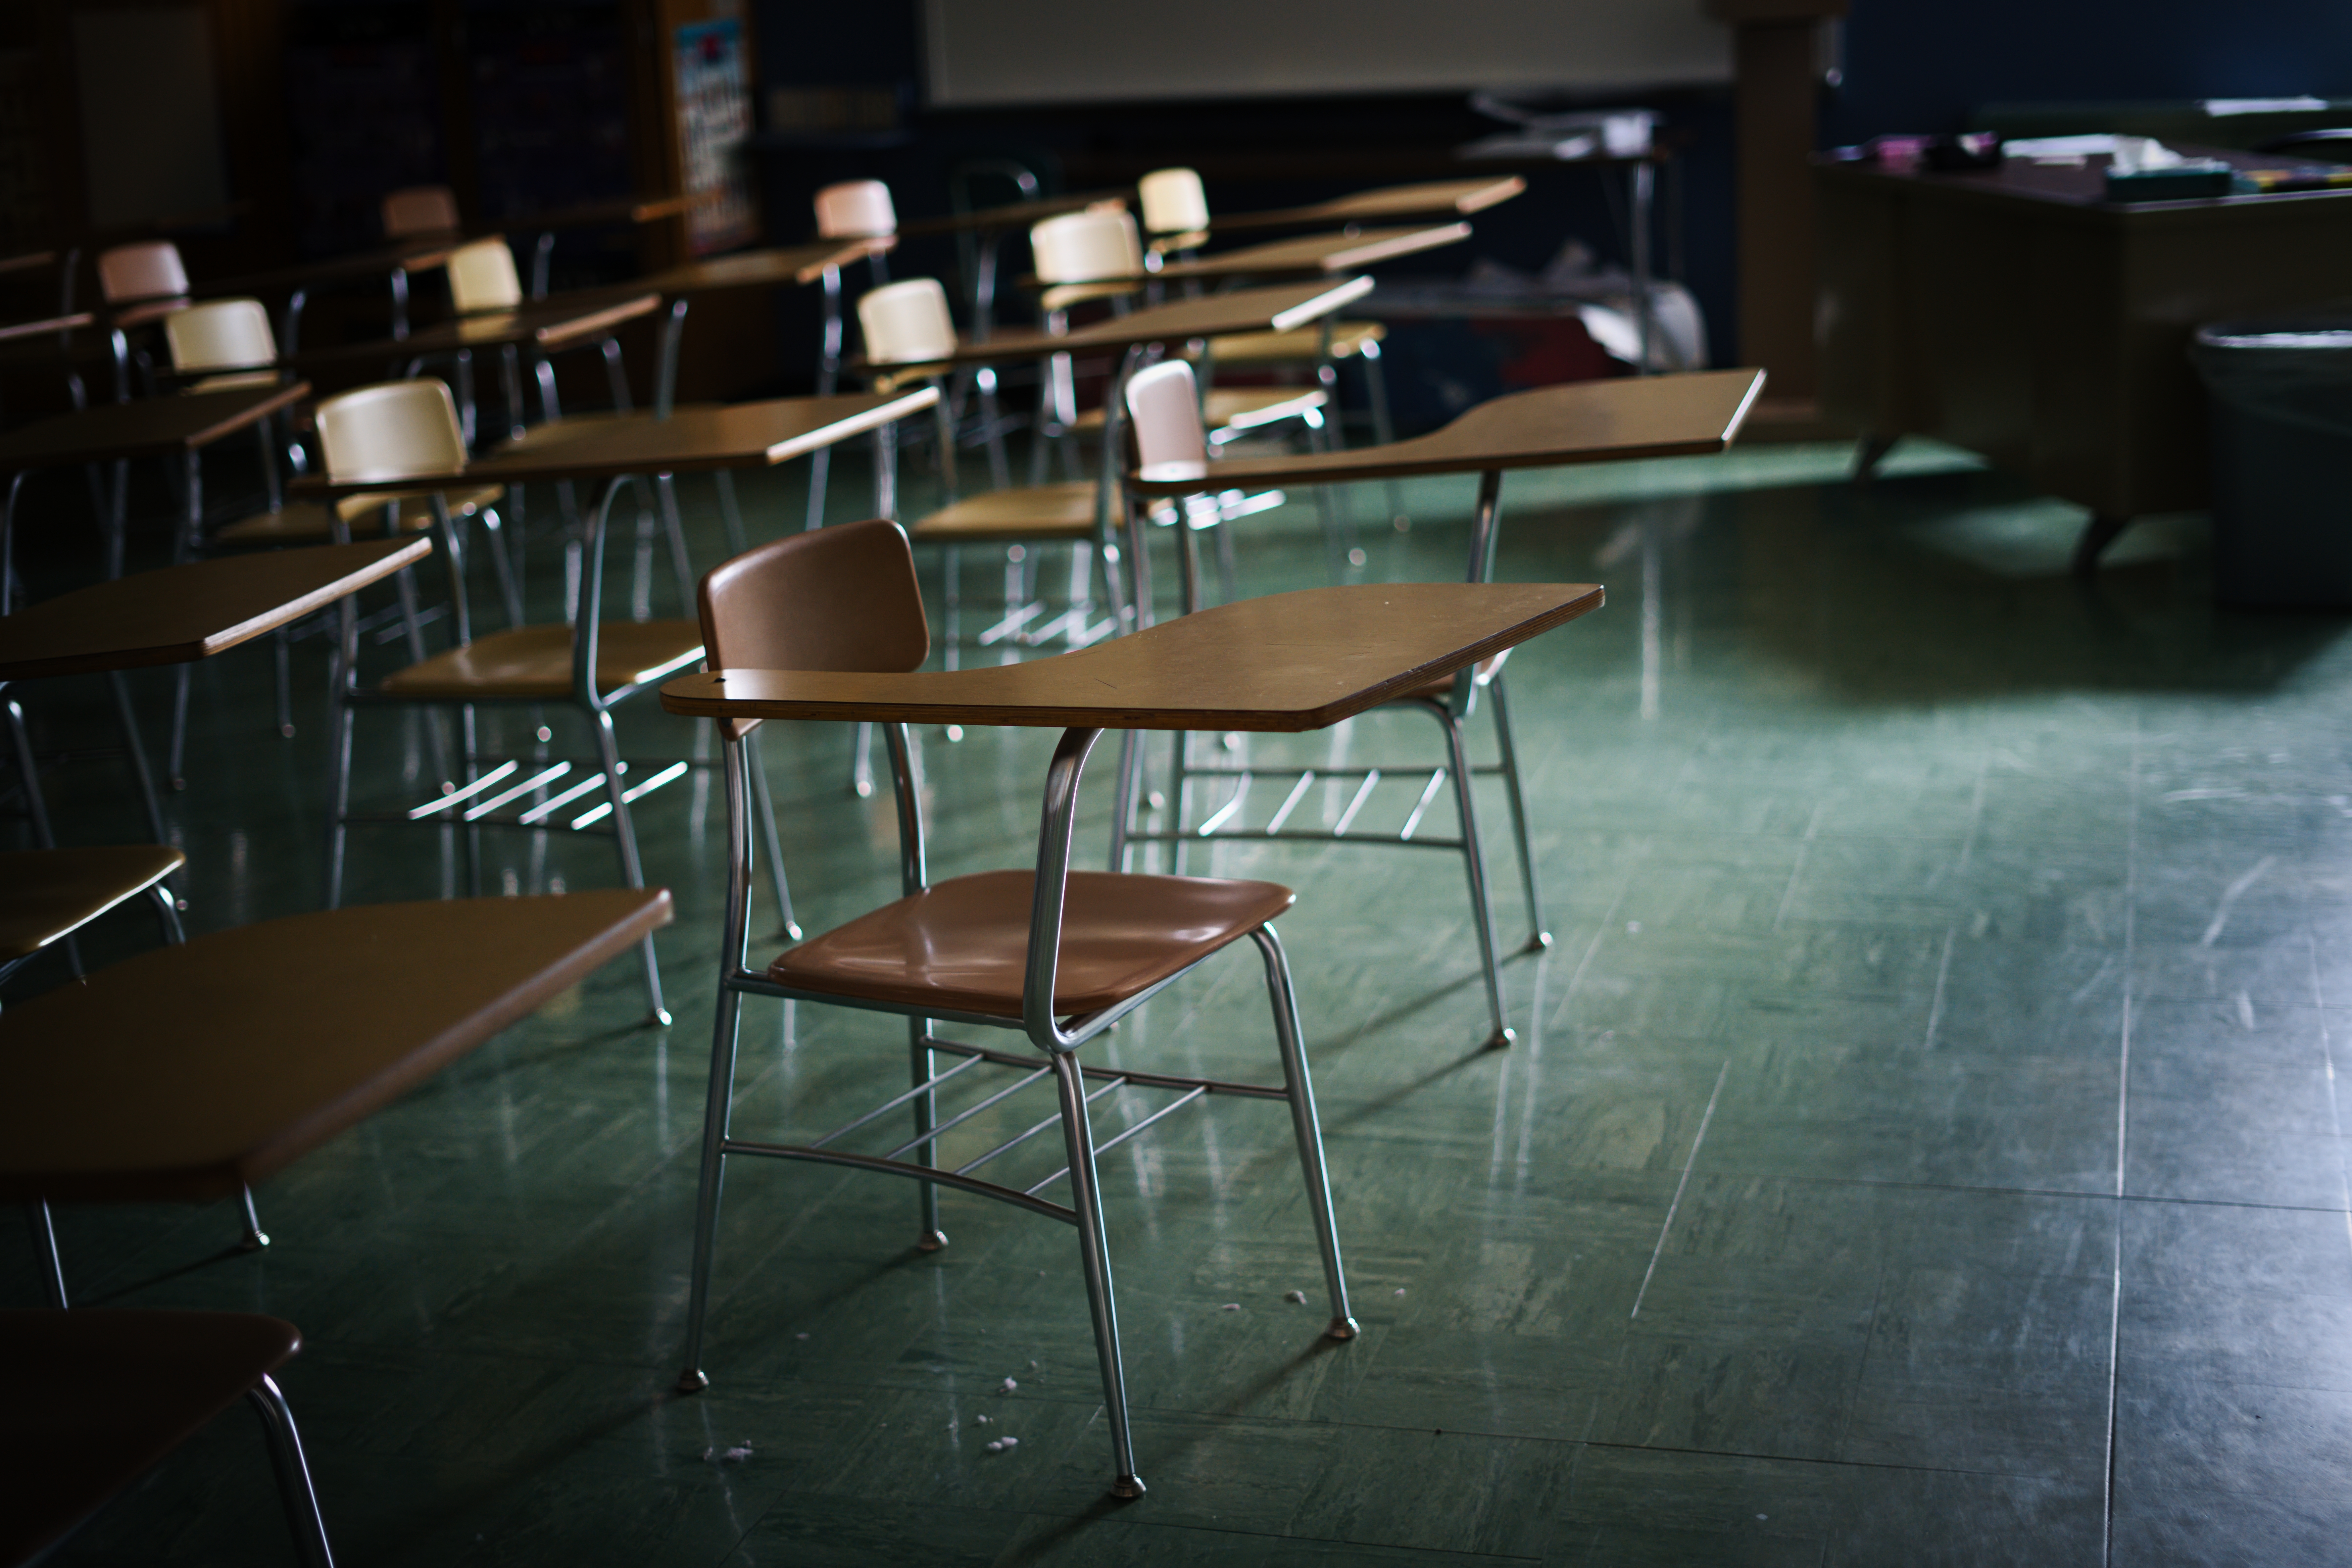 A dark, empty classroom | Source: Shutterstock